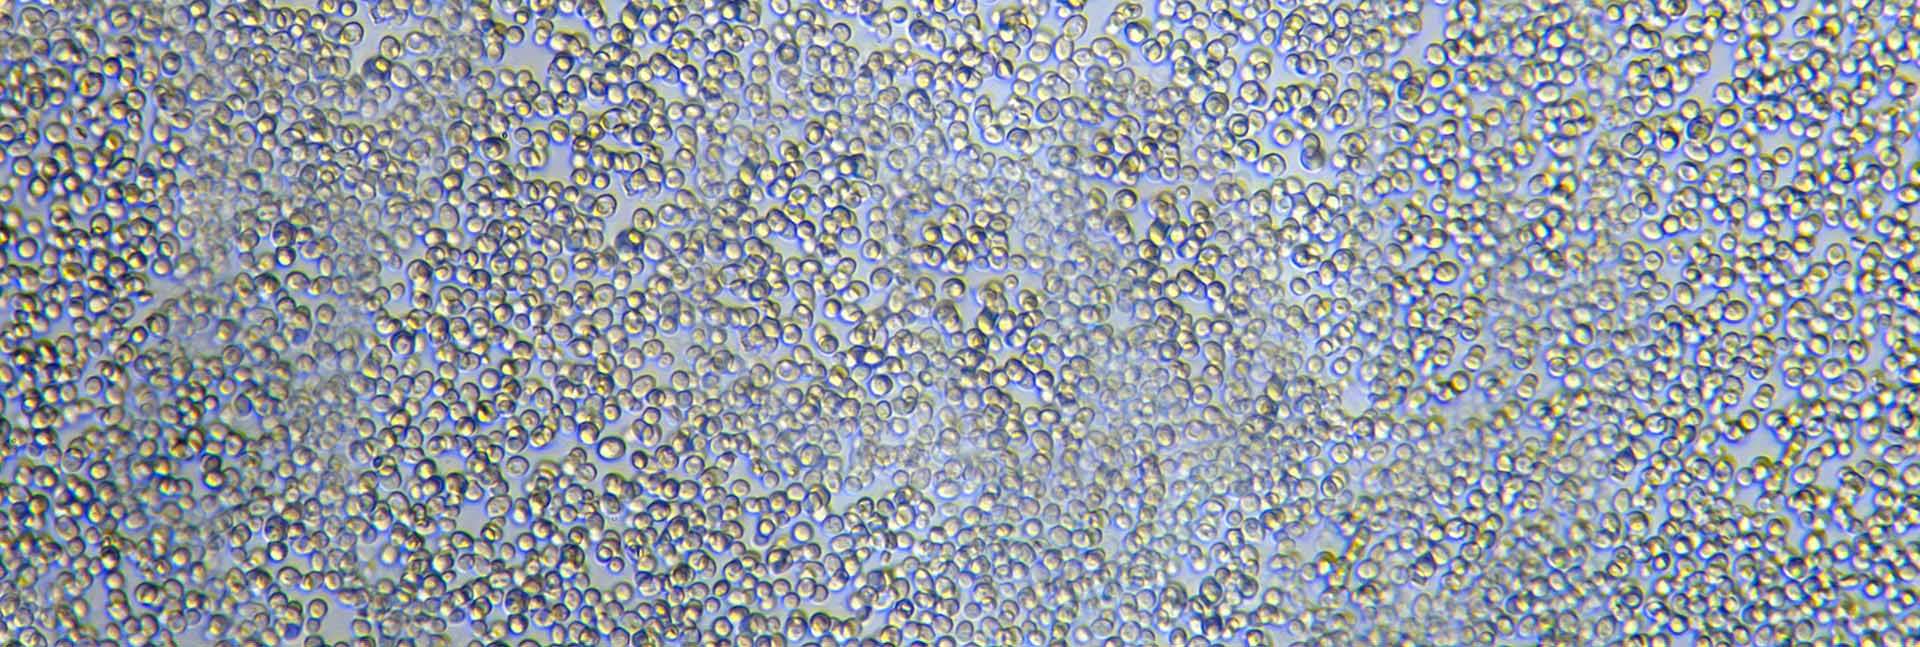 Yeast cells. Shutterstock